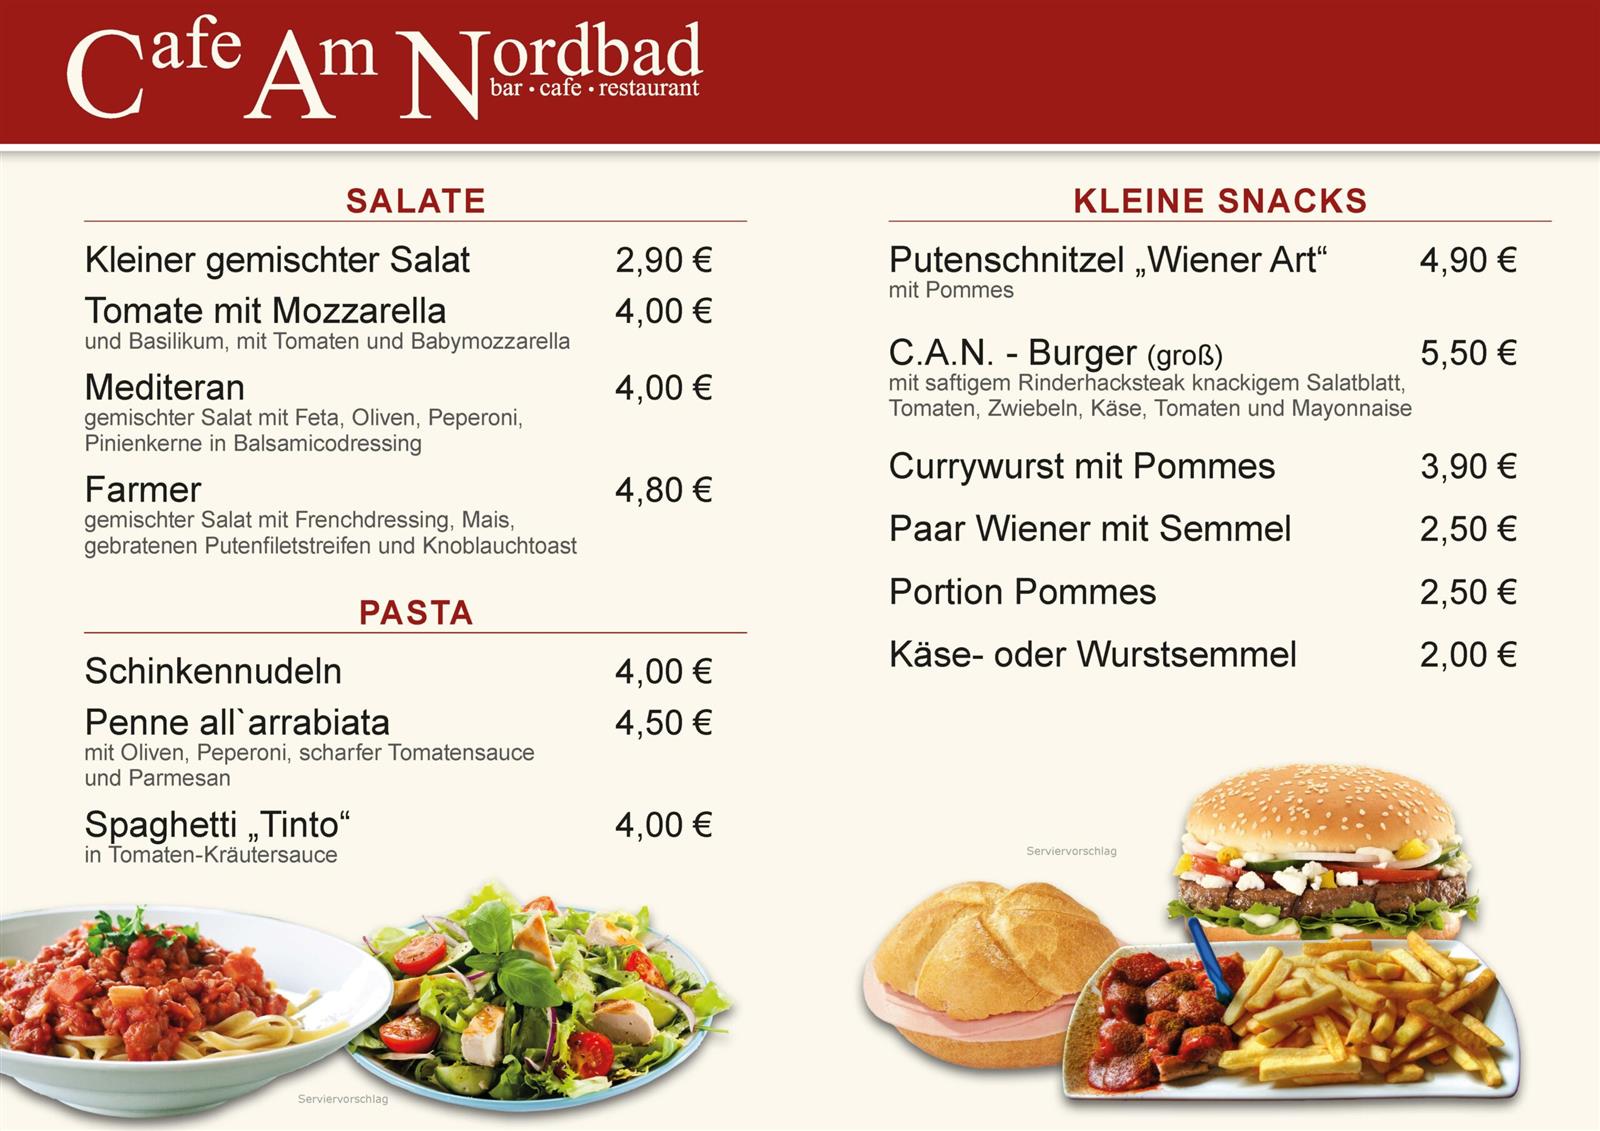 Preisliste_Bad-speisekarte-getraenkekarte-restaurant-gastronomie-dnz-networks.com1